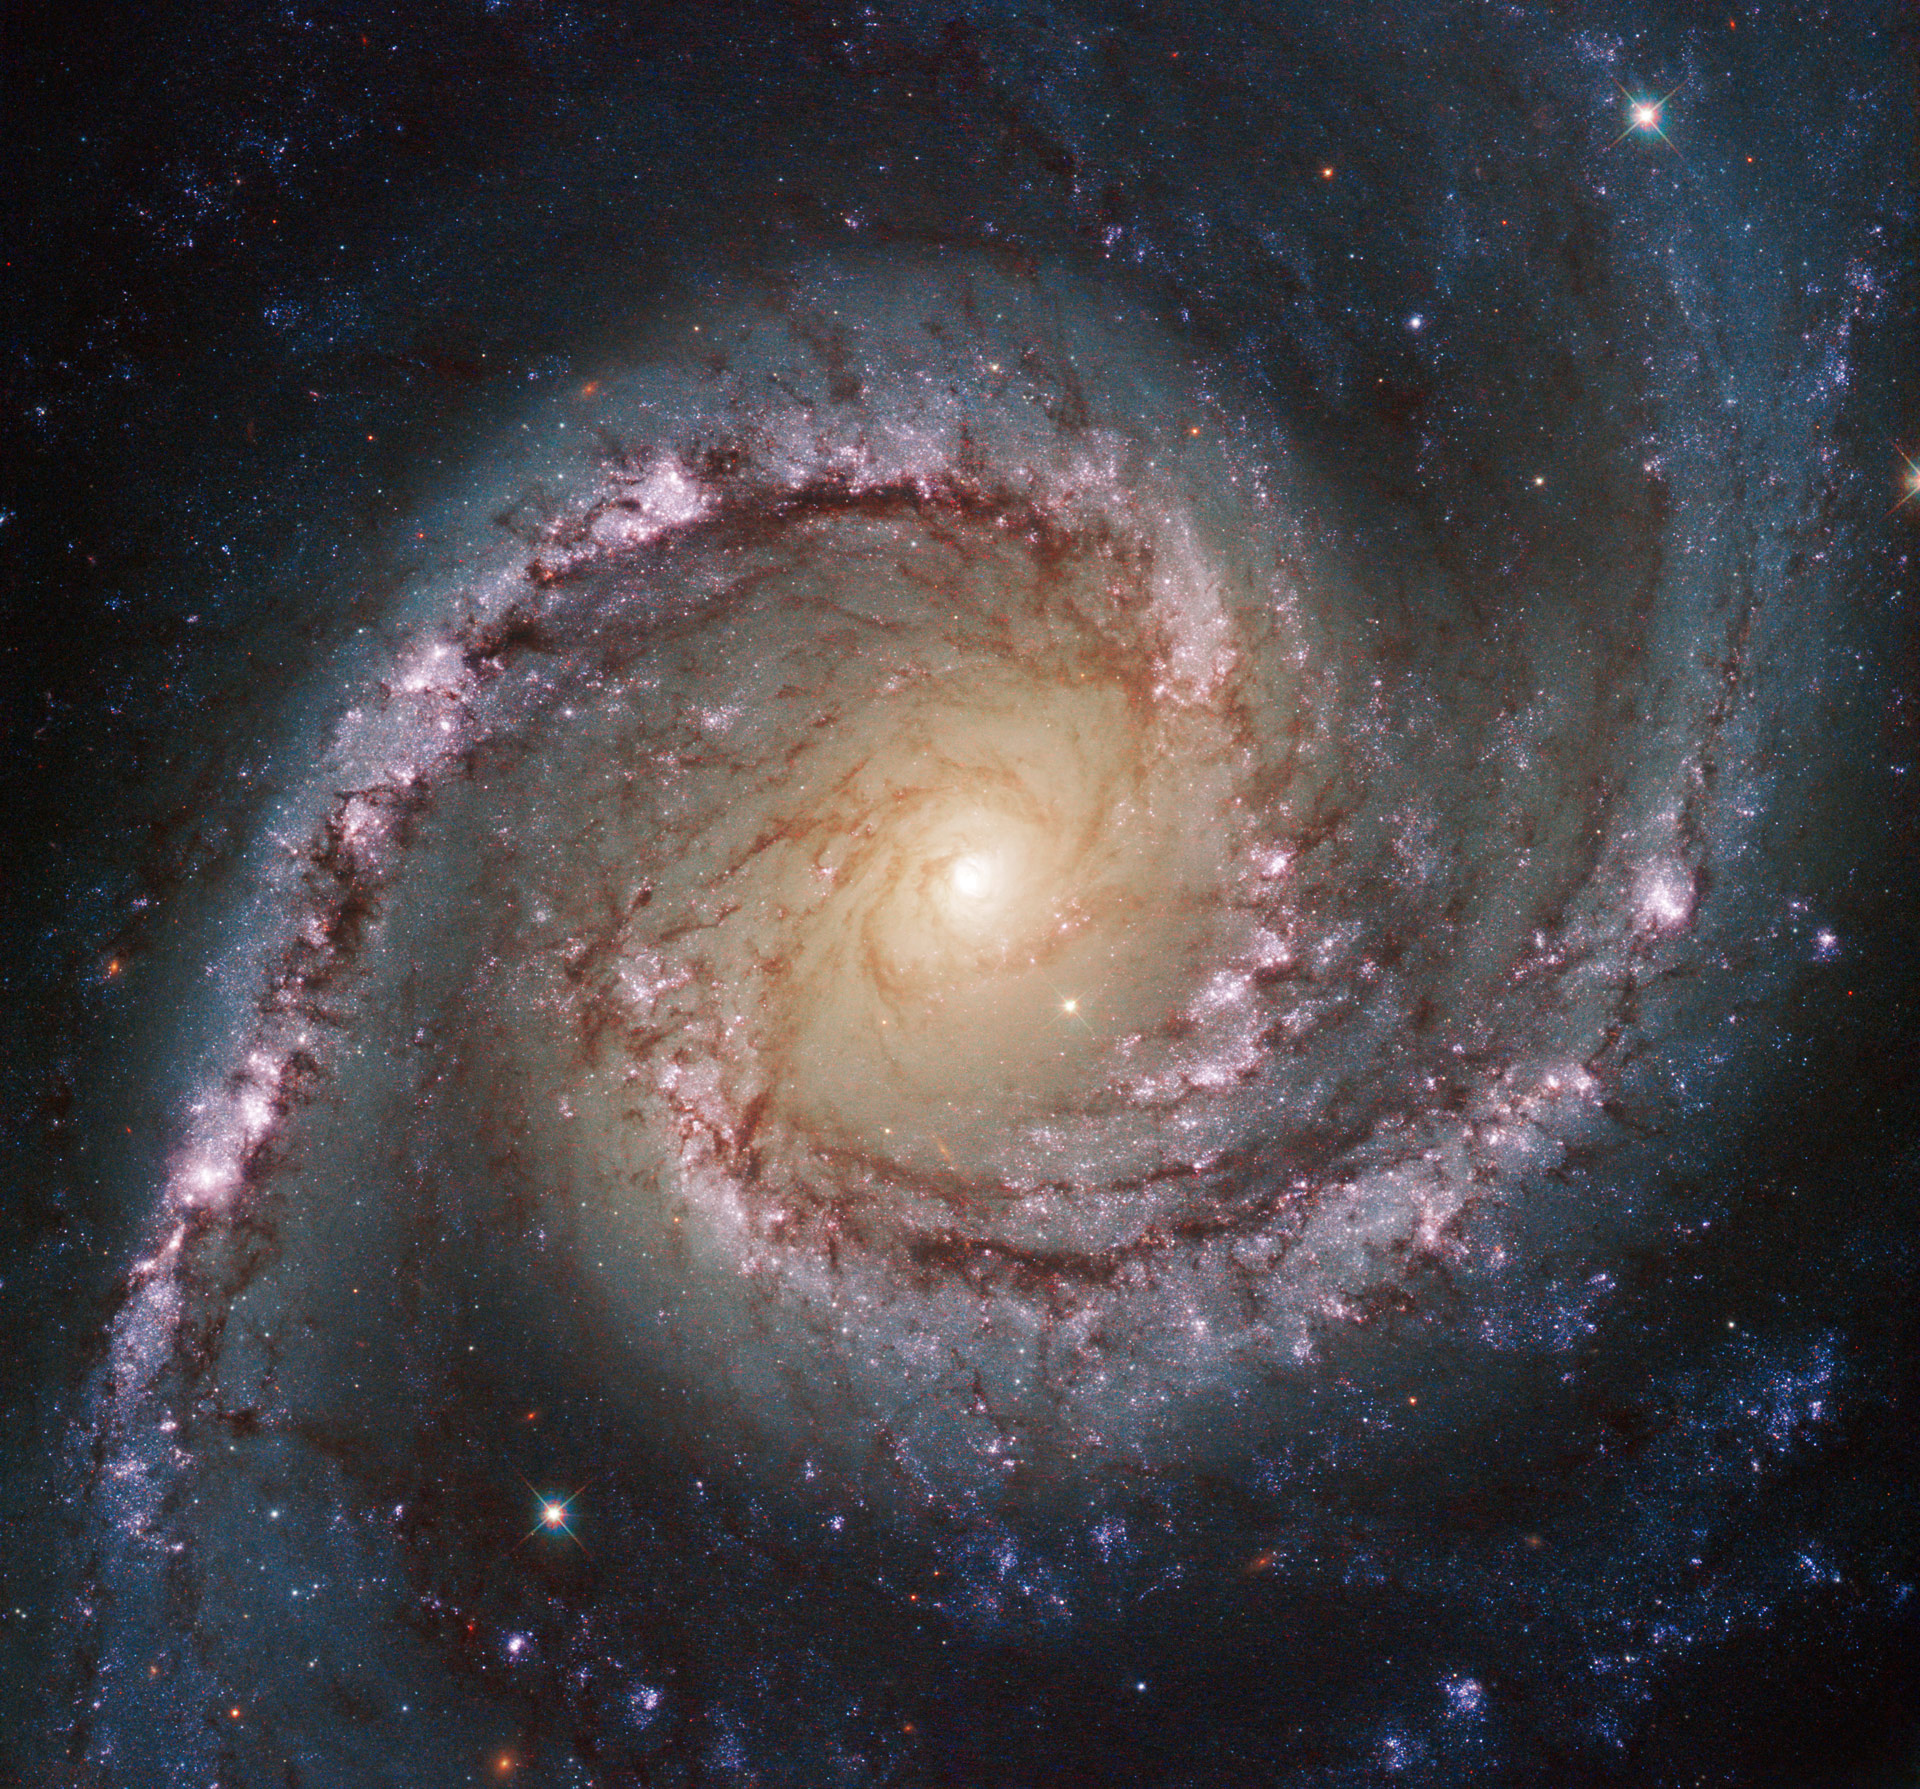 Hubble Views Intermediate Spiral Galaxy NGC 1566